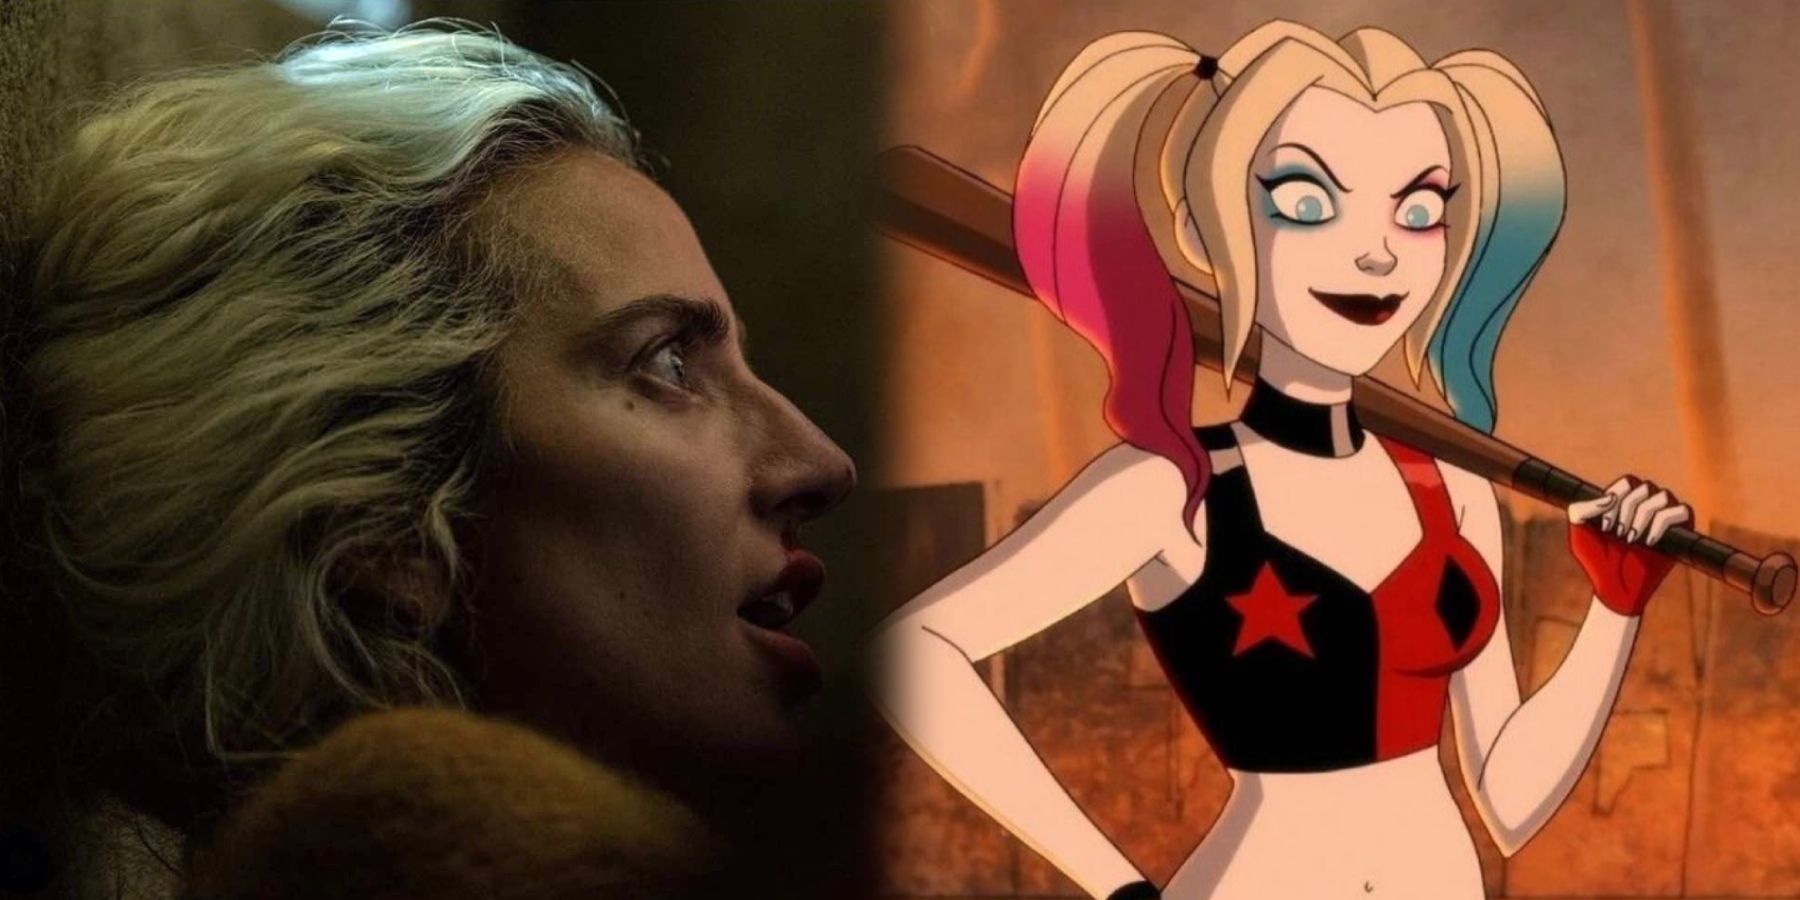 Joker 2: Behind-The-Scenes Photos Reveal More Of Lady Gaga’s Harley Quinn